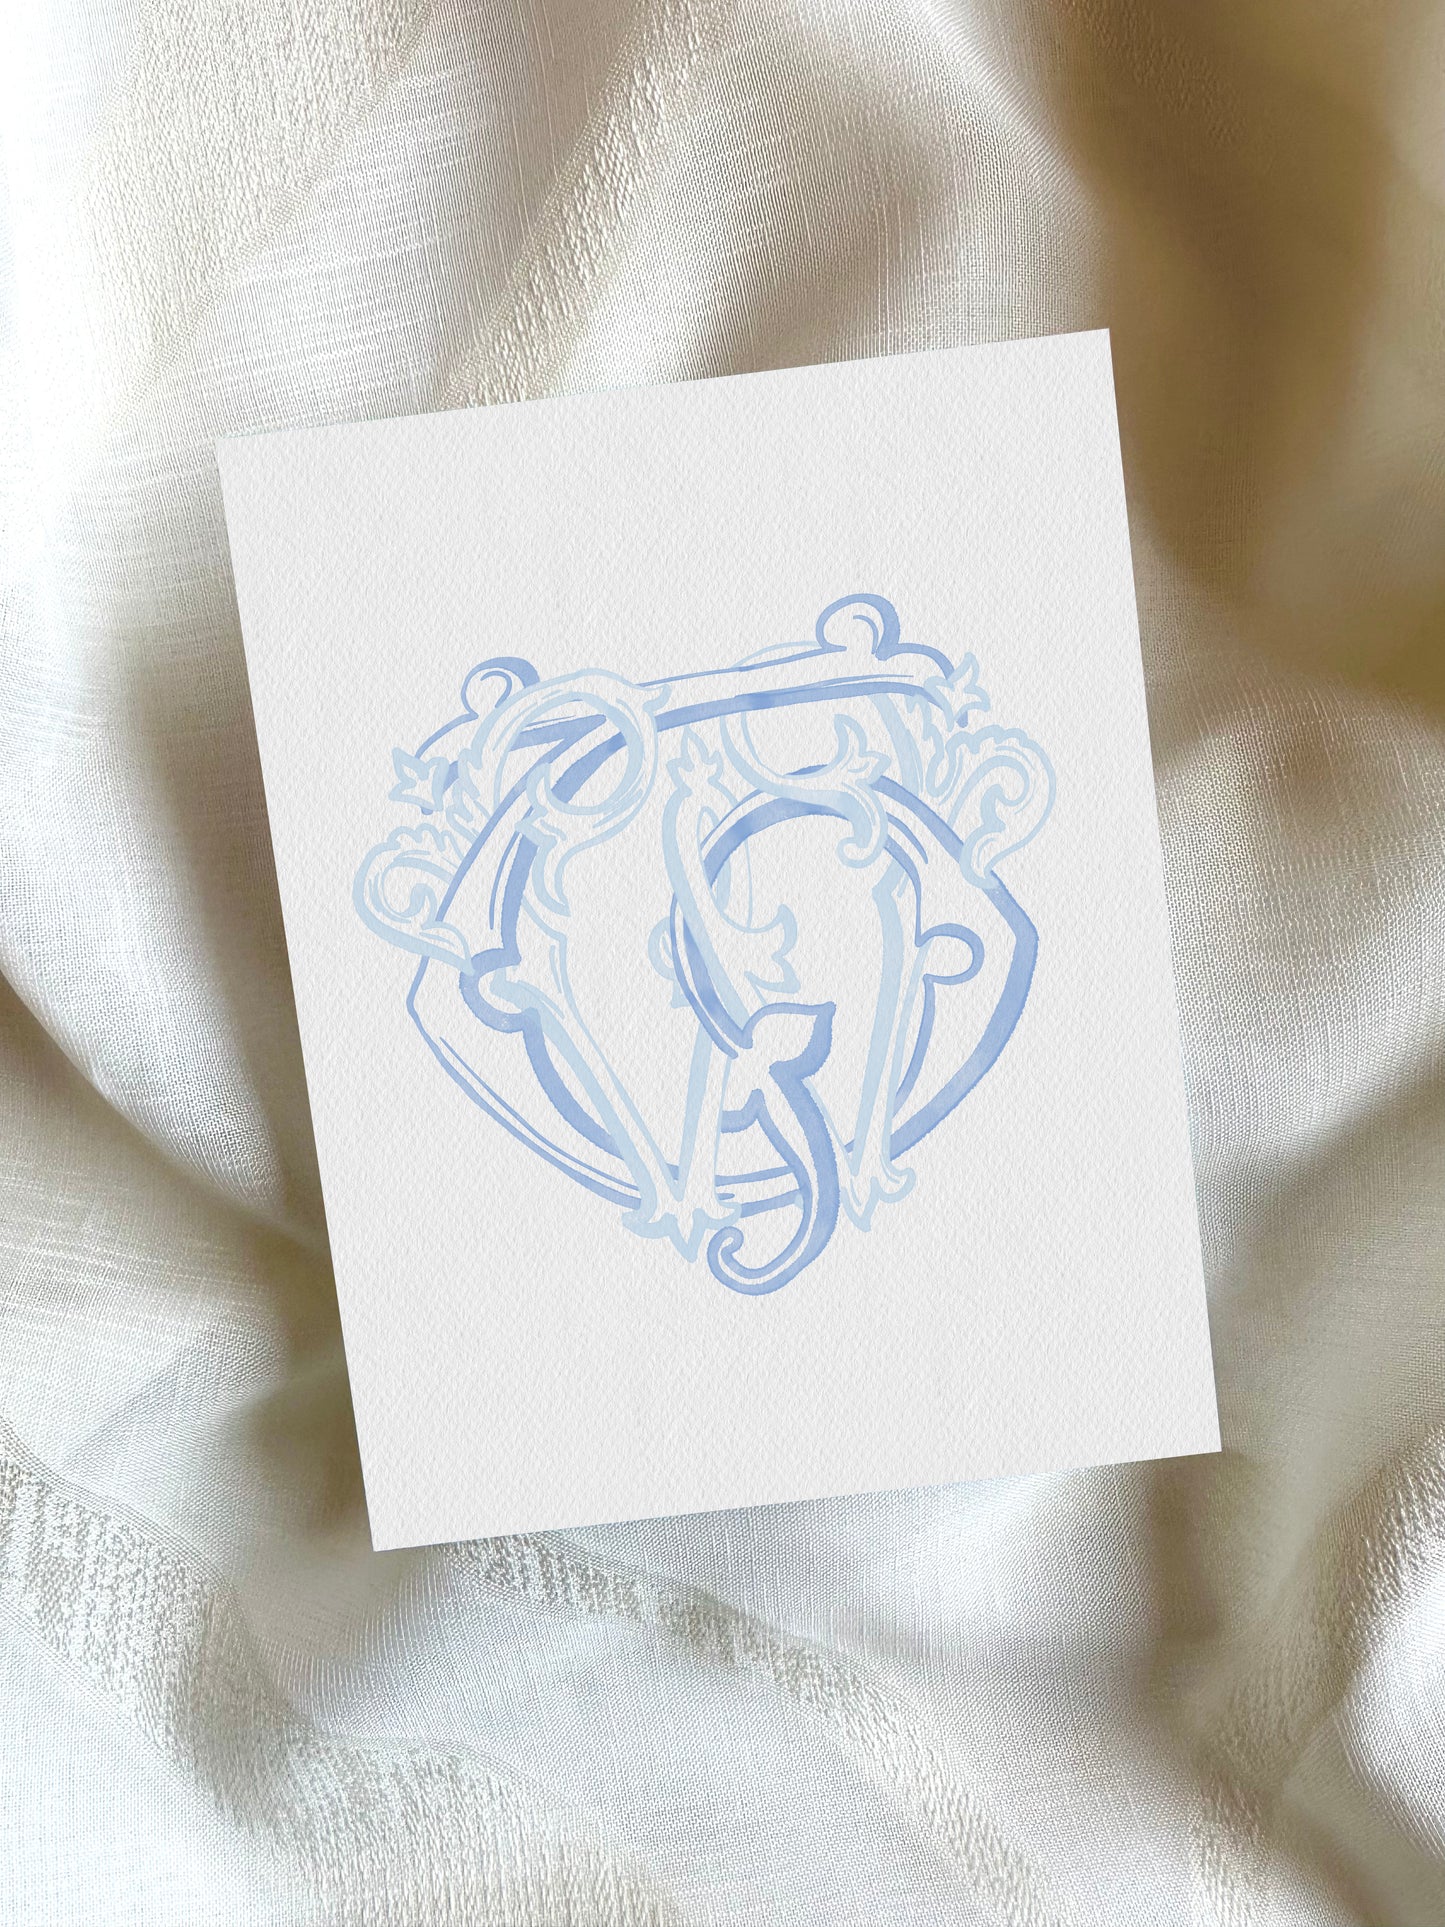 2 Letter Monogram with Letters TW WT | Digital Download - Wedding Monogram SVG, Personal Logo, Wedding Logo for Wedding Invitations The Wedding Crest Lab